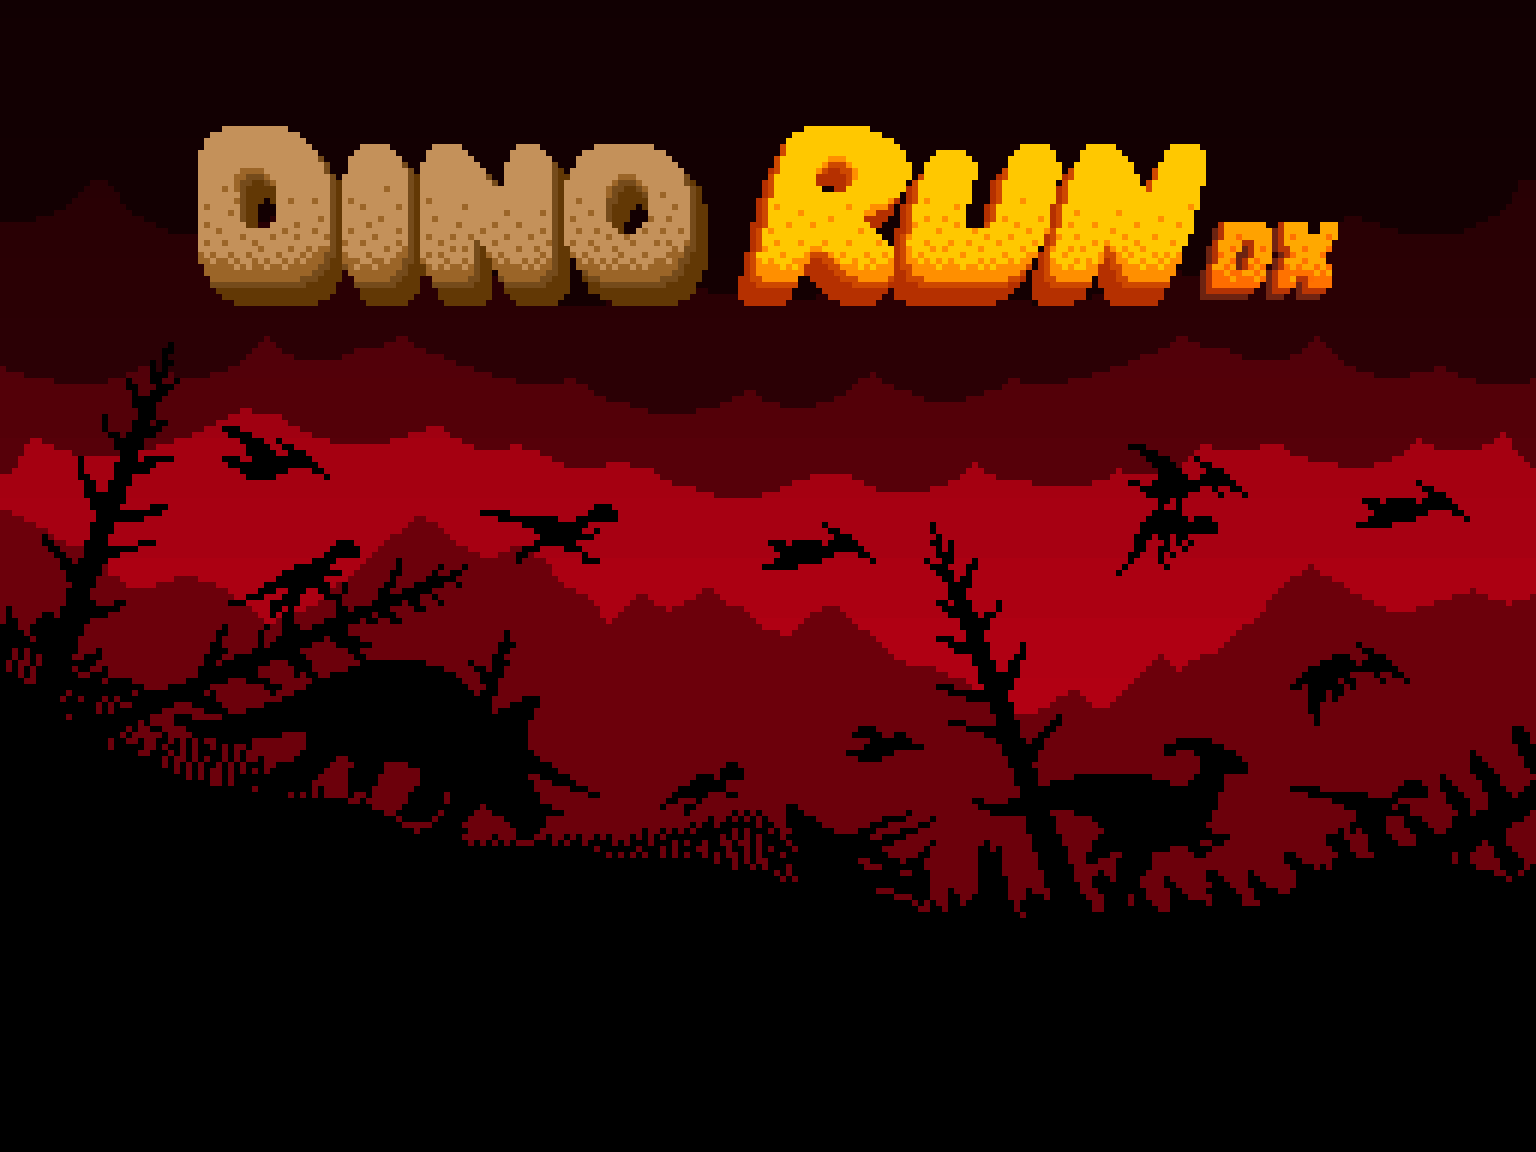 Steam :: Dino Run DX :: The Dino Run 2 Kickstarter Has Begun!